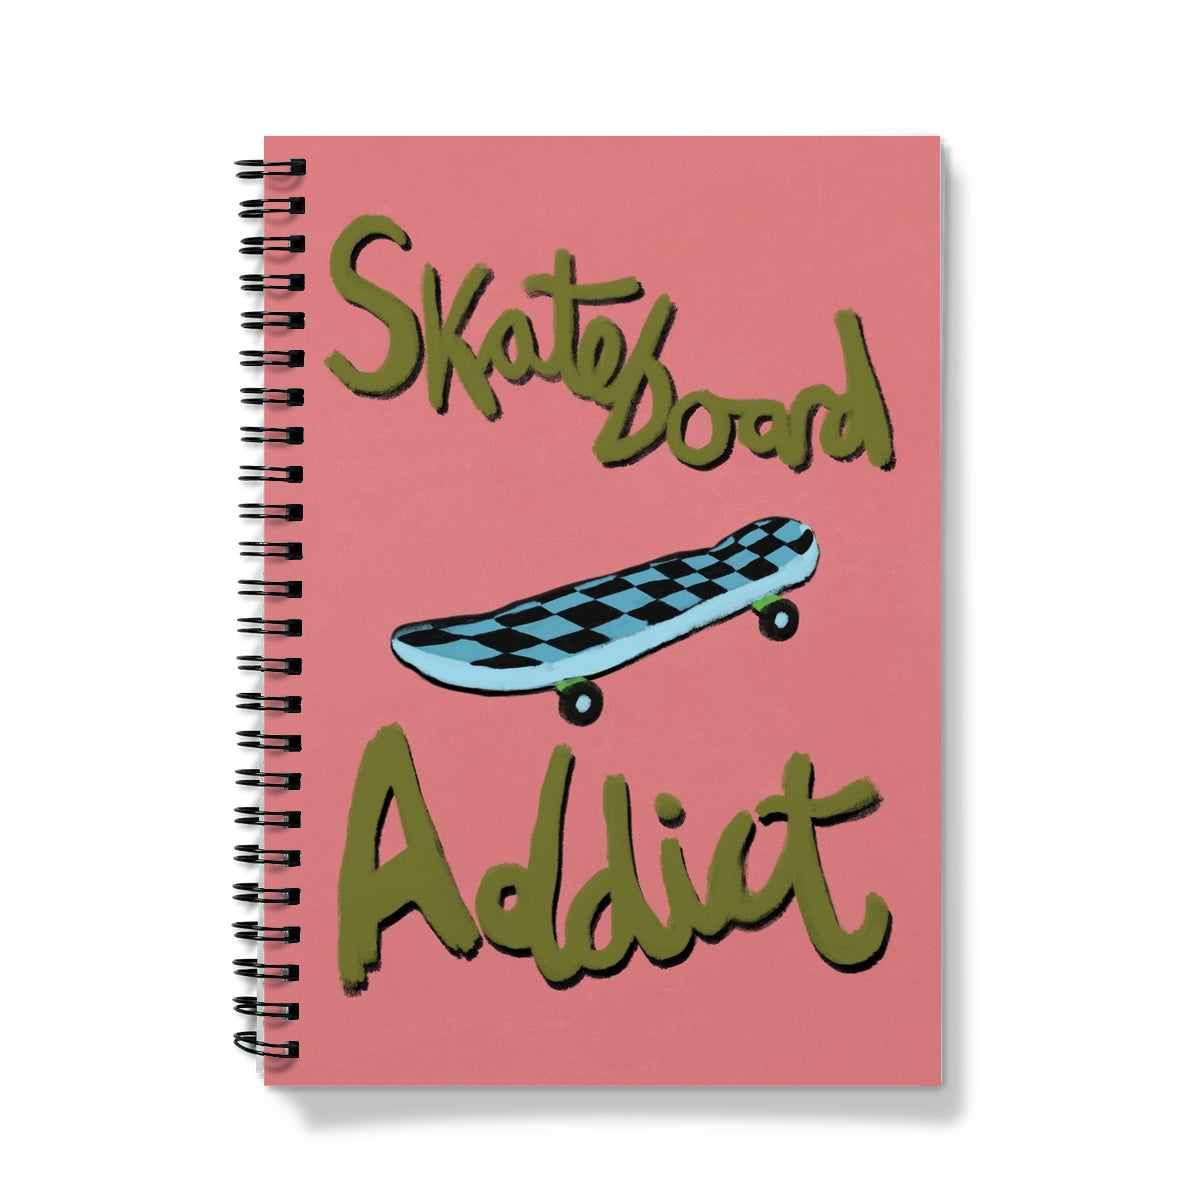 Skateboard Addict - Coral, Olive Green, Blue Notebook